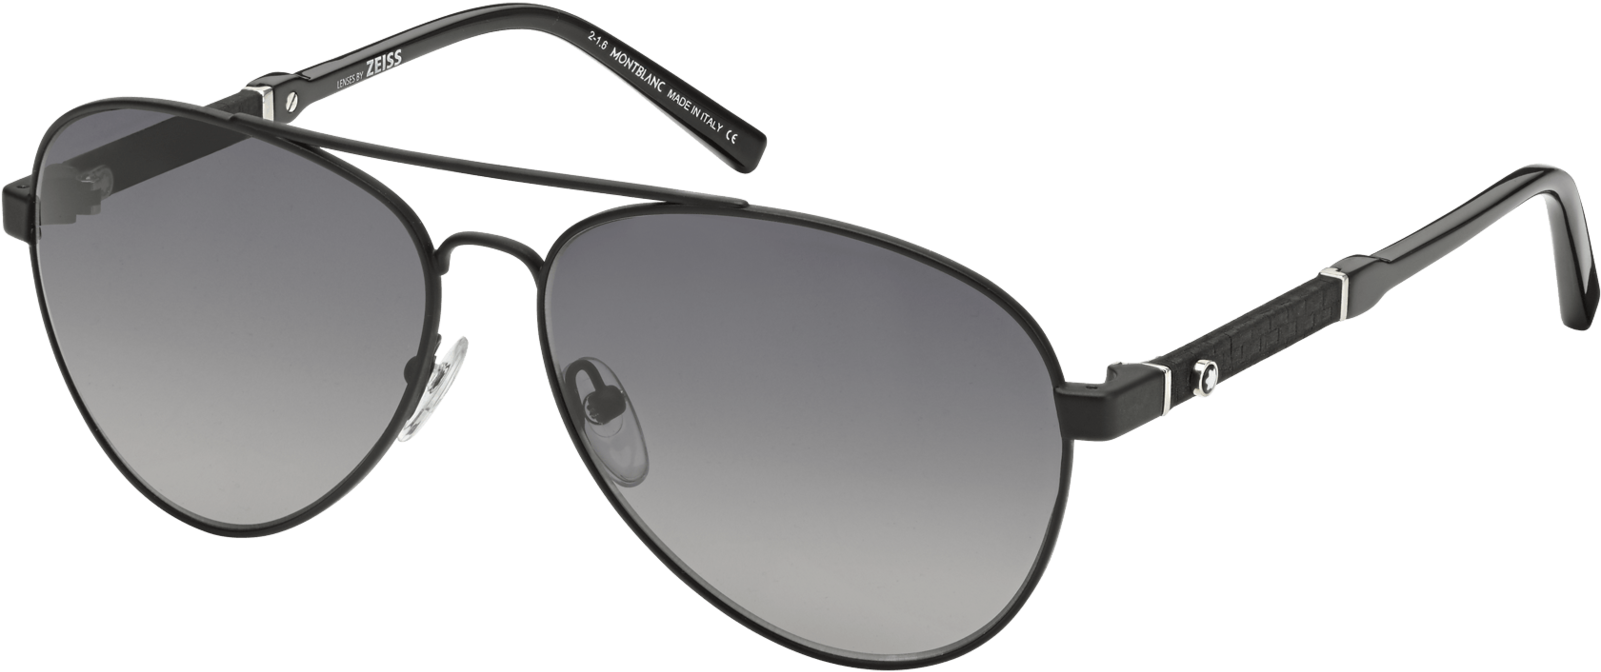 Designer Black Aviator Sunglasses PNG